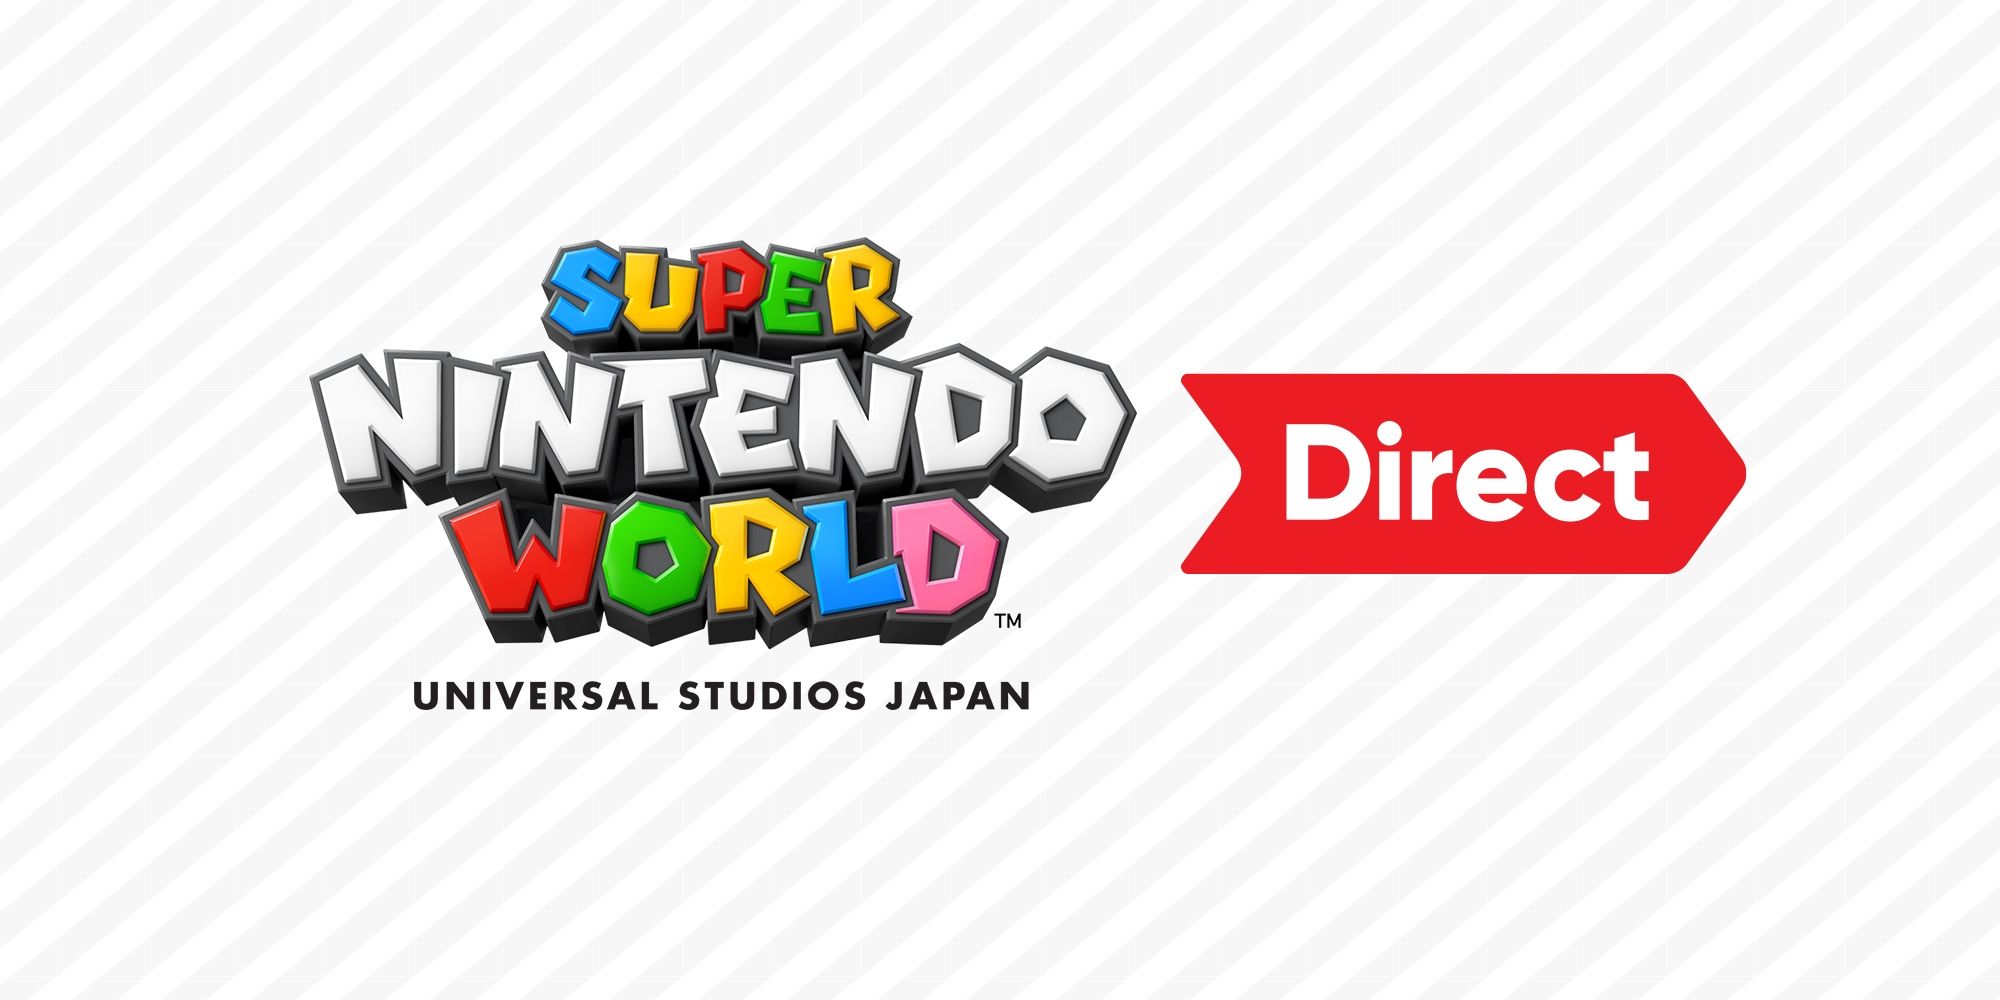 Super Nintendo World Direct December 18